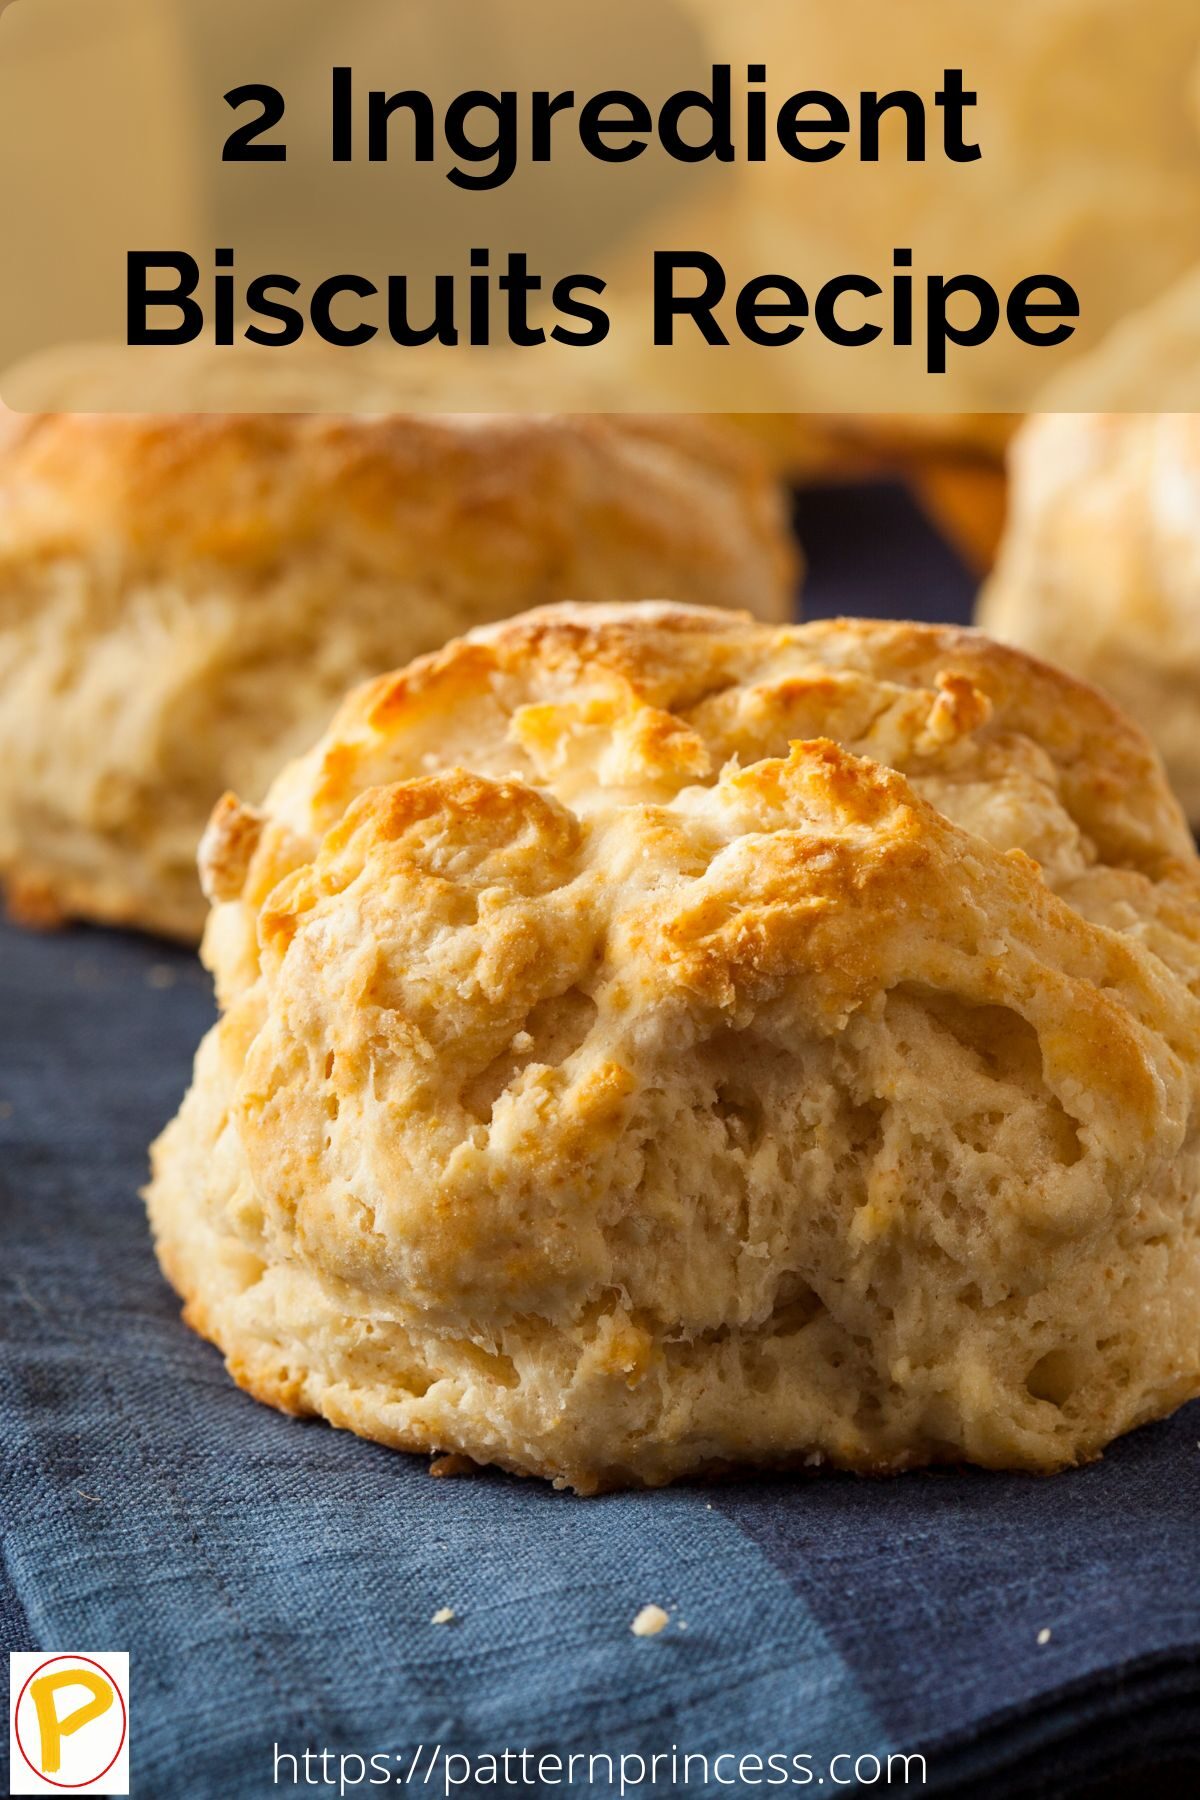 2 Ingredient Biscuits Recipe